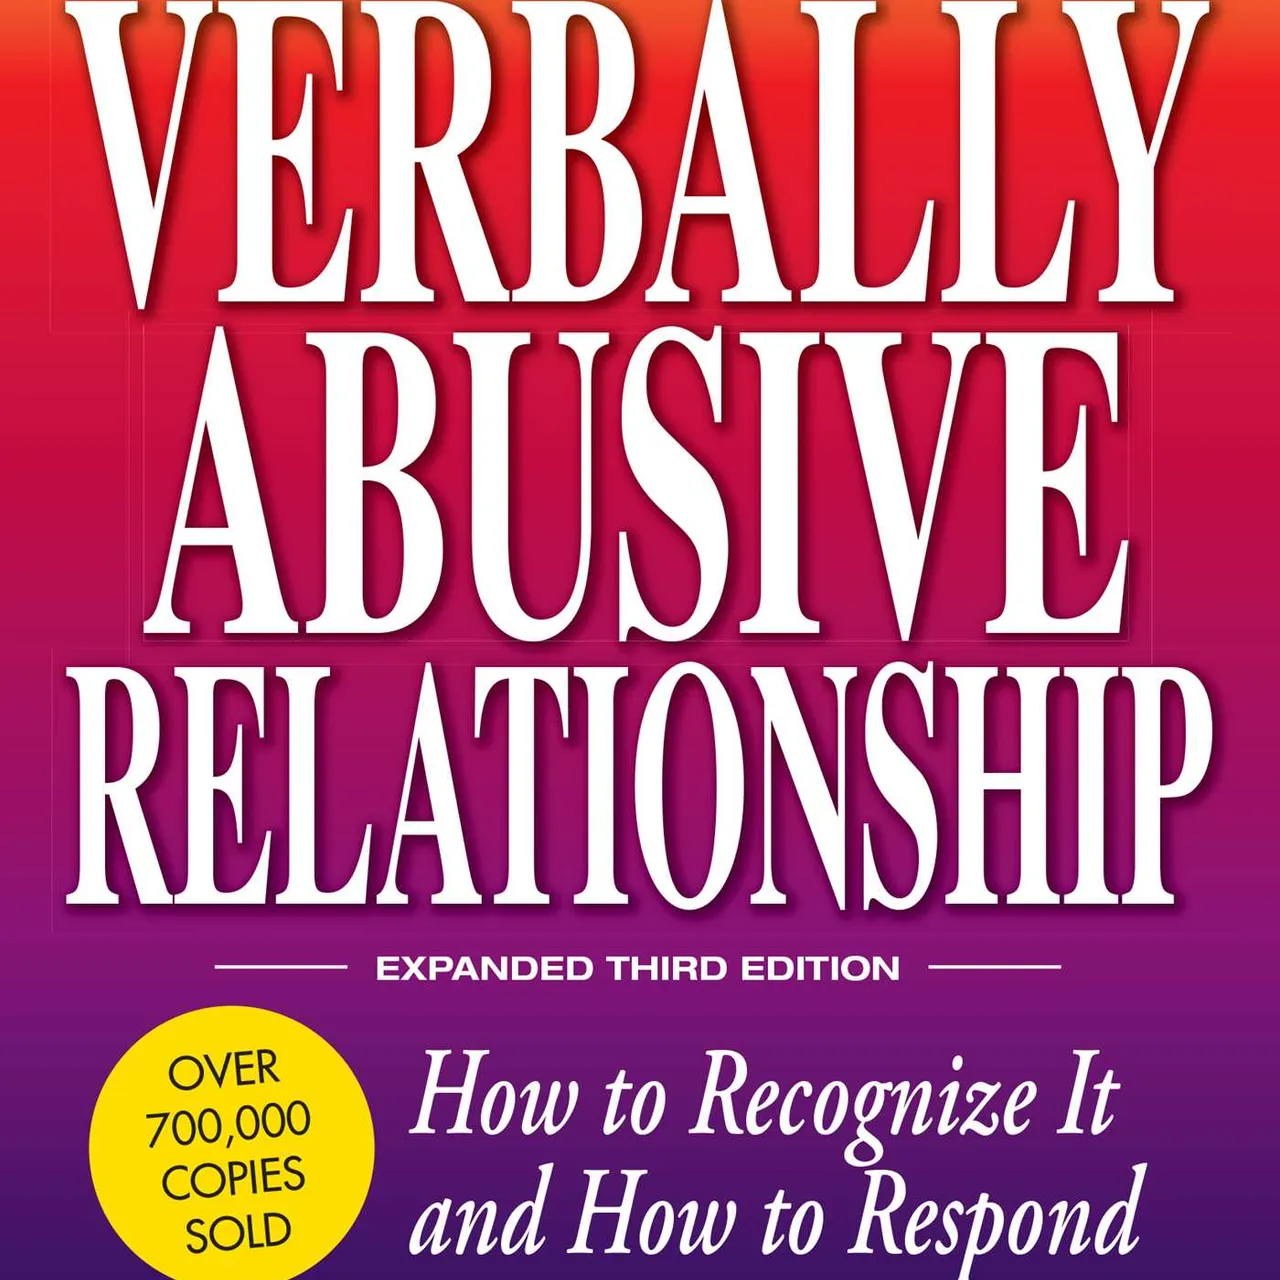 Book against verbal abuse photo 1